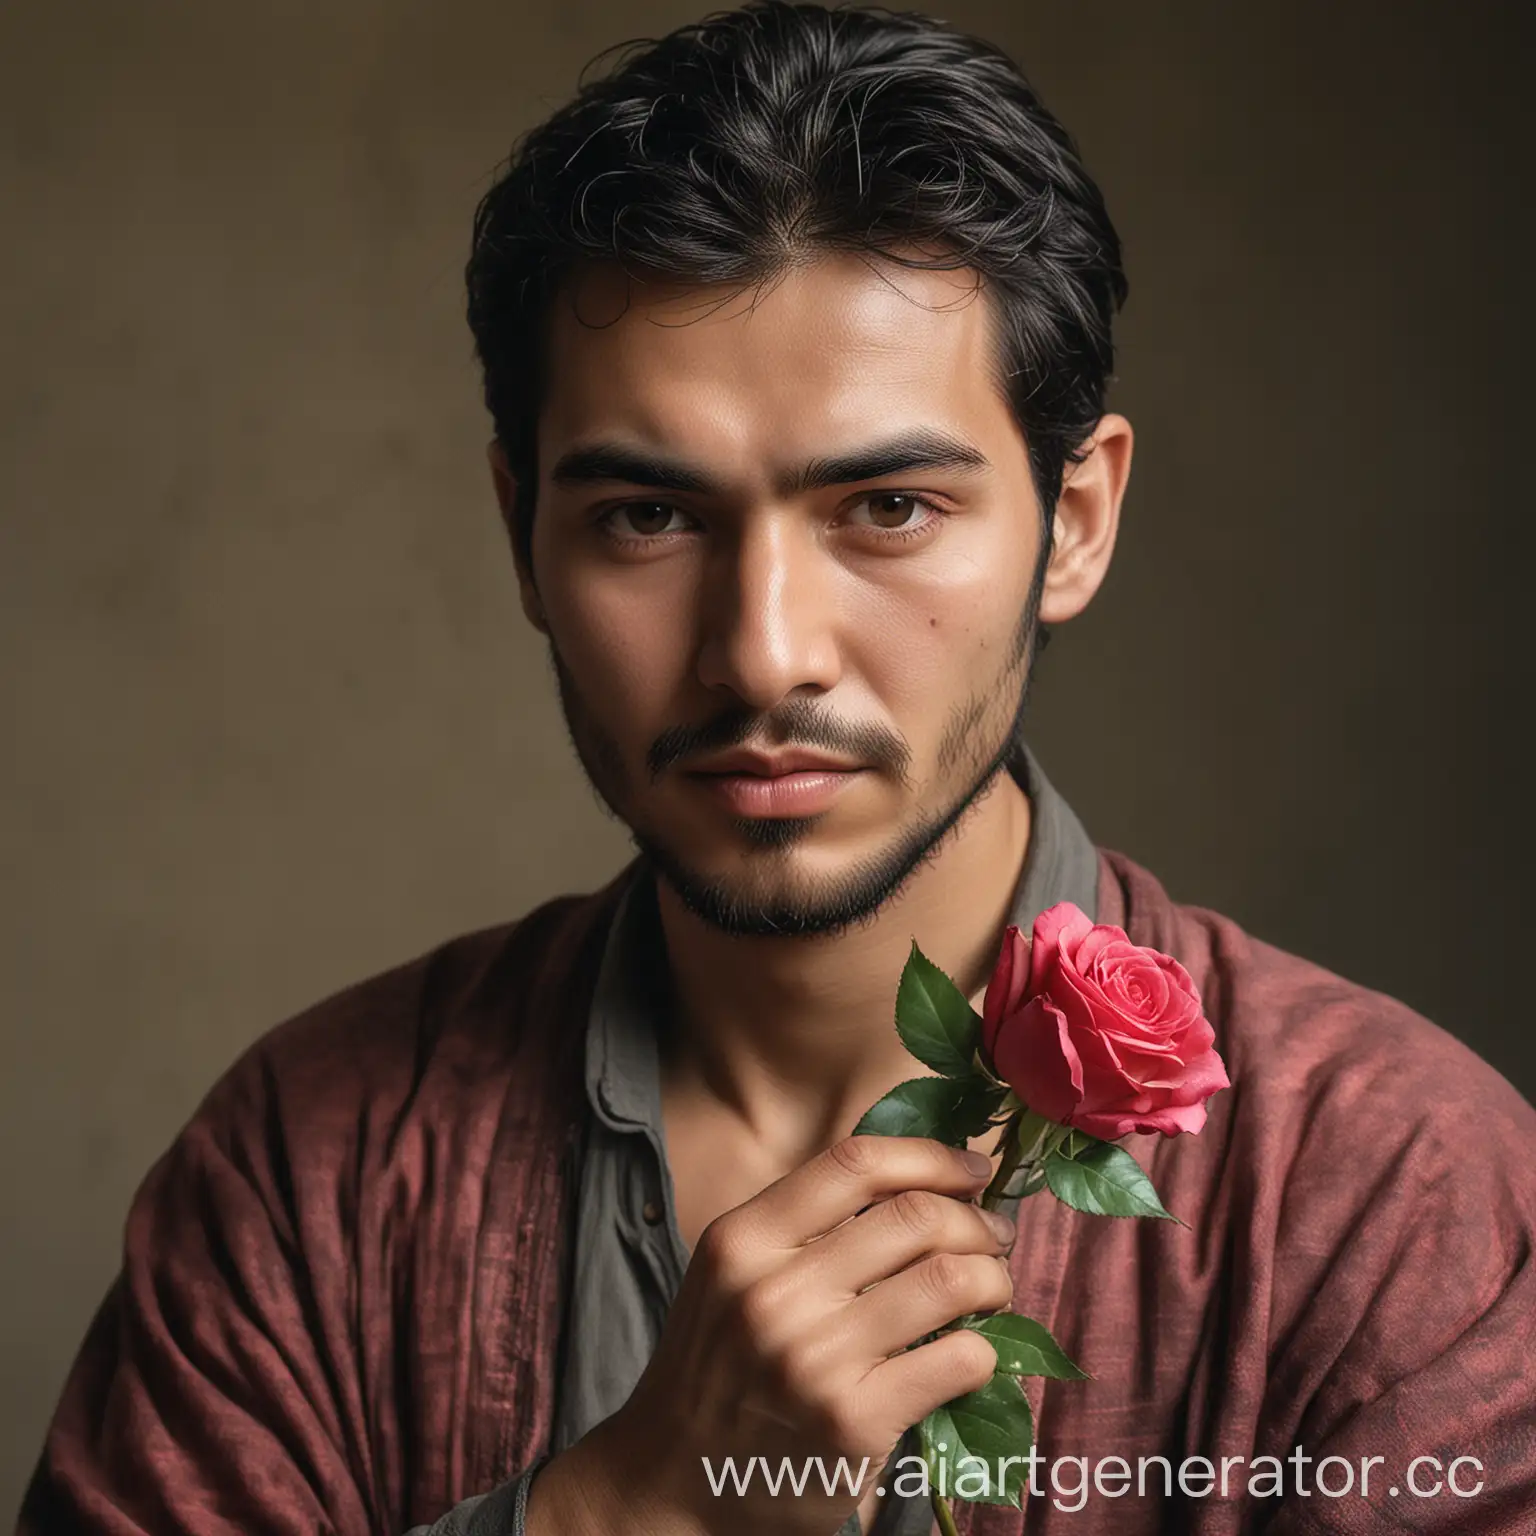 Eastern-Man-Holding-Rose-Cultural-Portrait-of-Romantic-Gesture